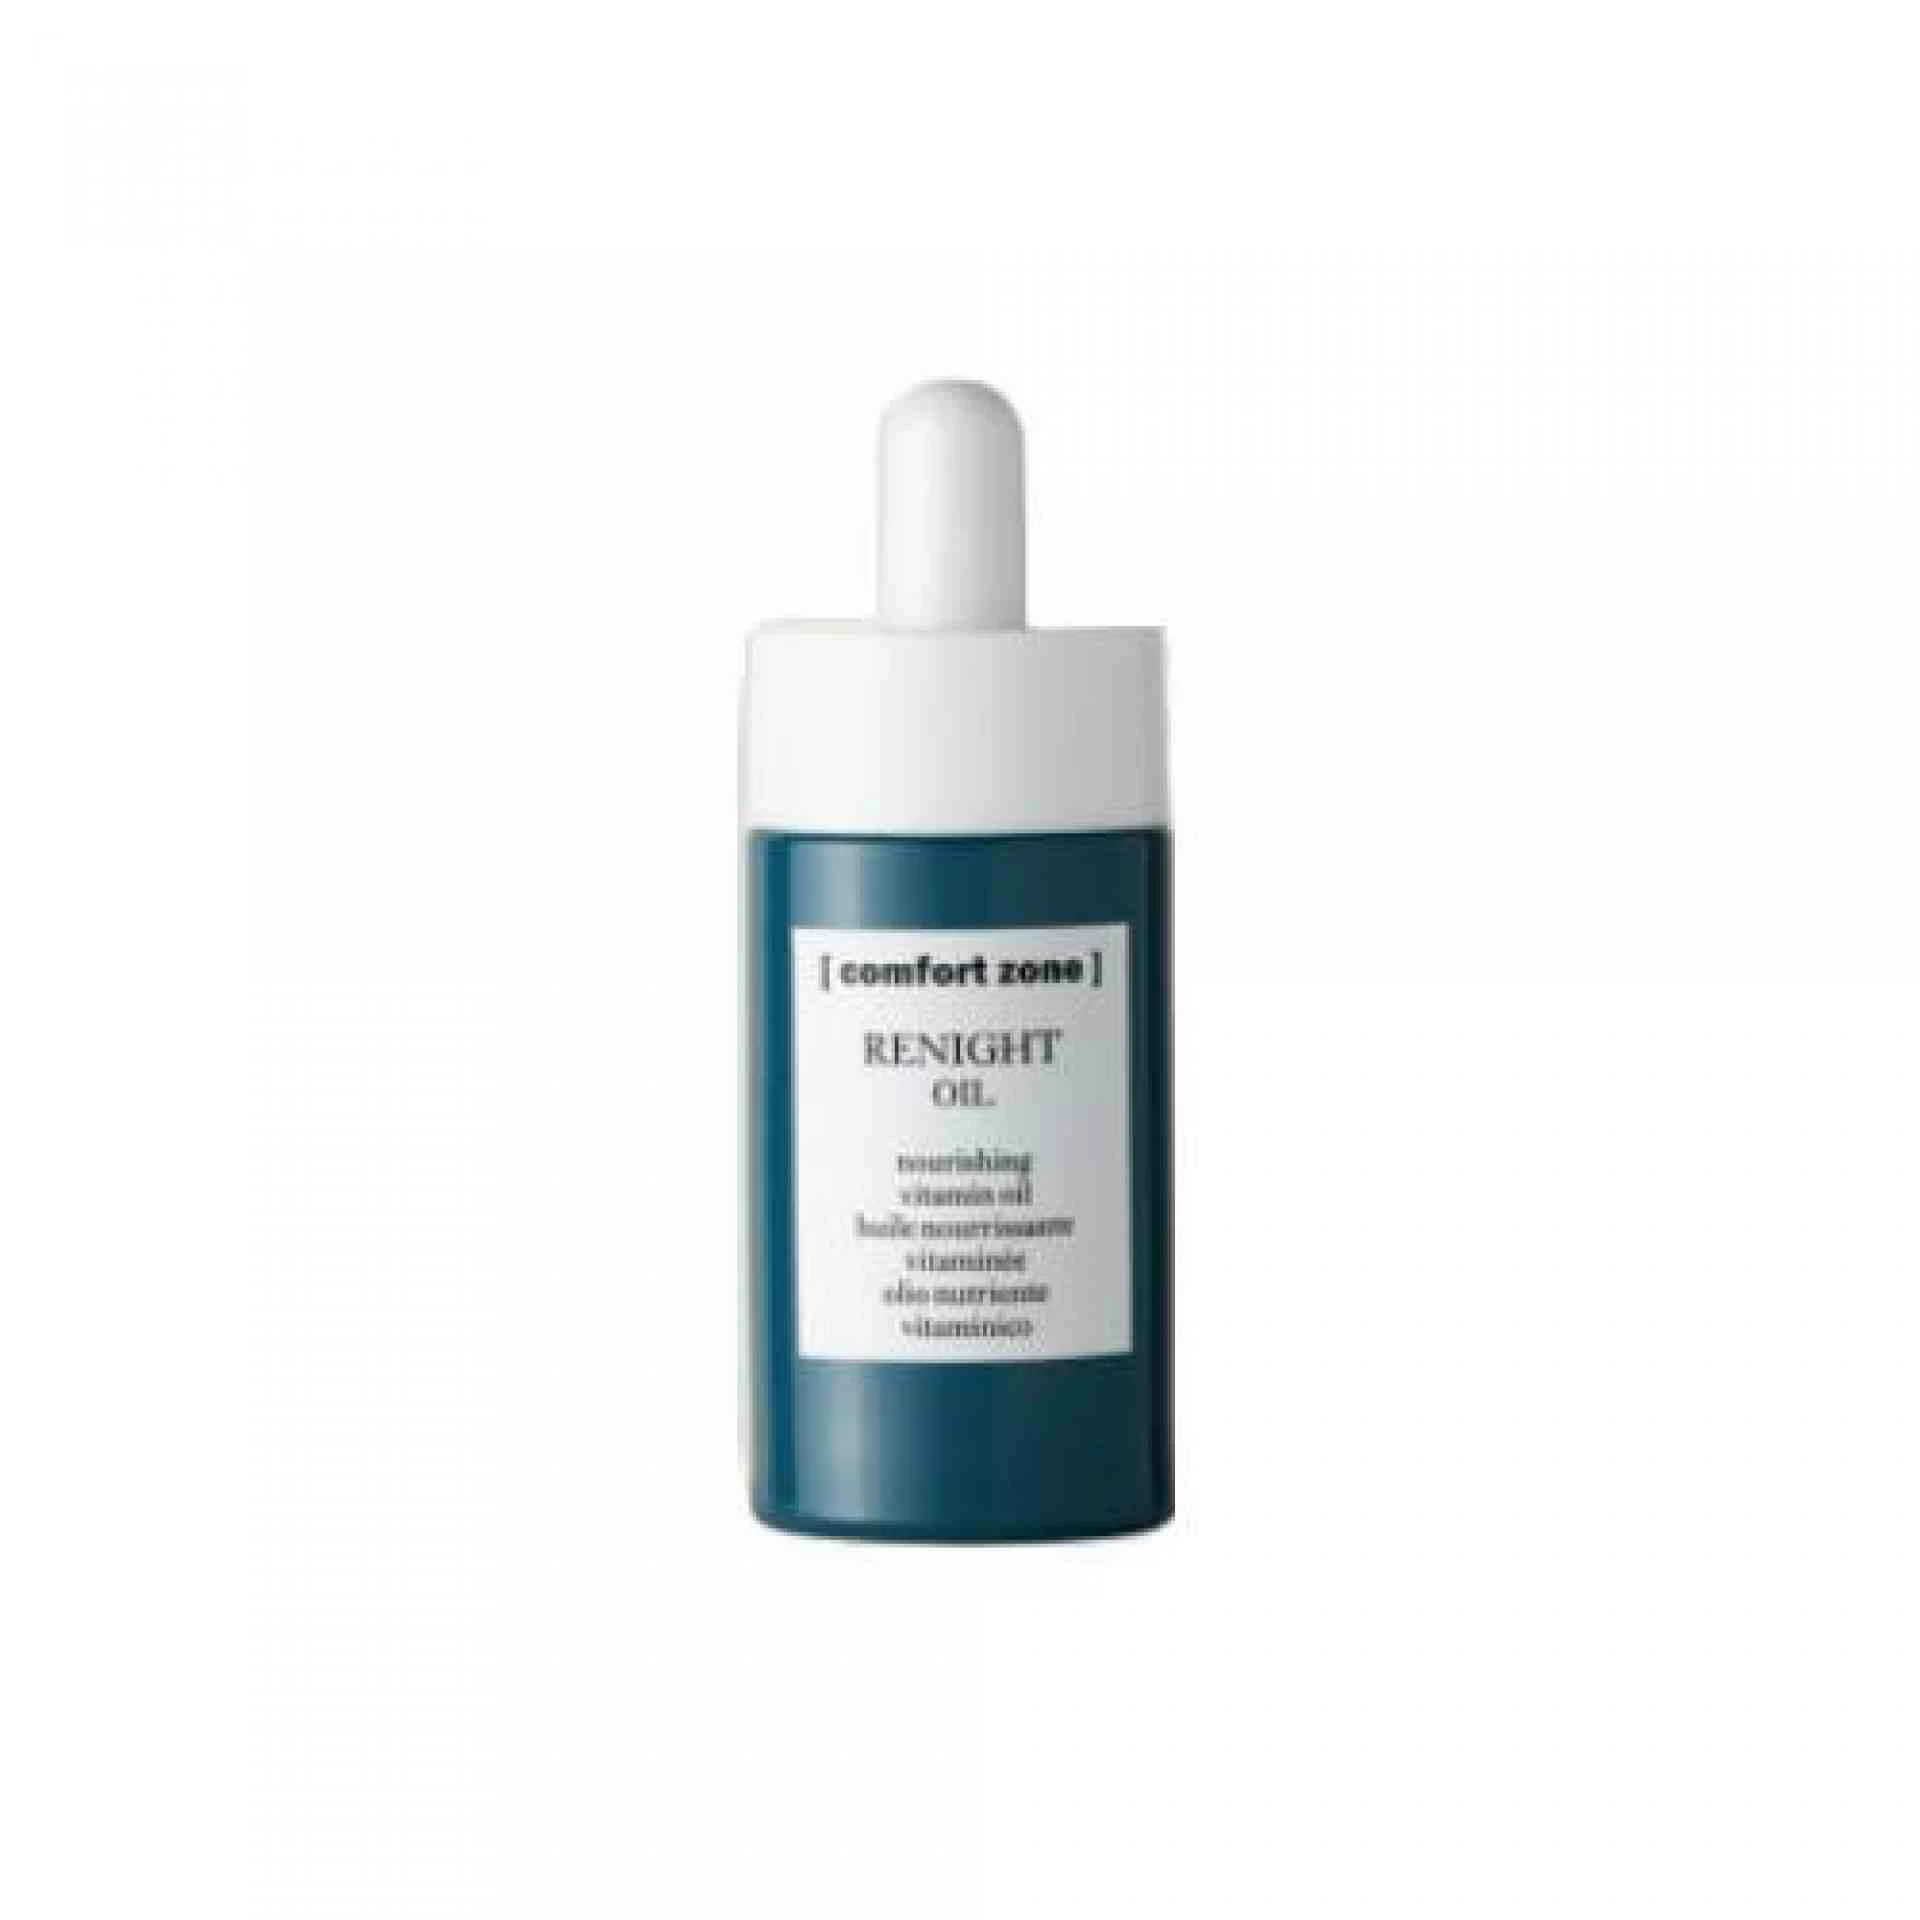 RENIGHT OIL | Aceite facial nutritivo 30ml - Renight - Comfort Zone ®